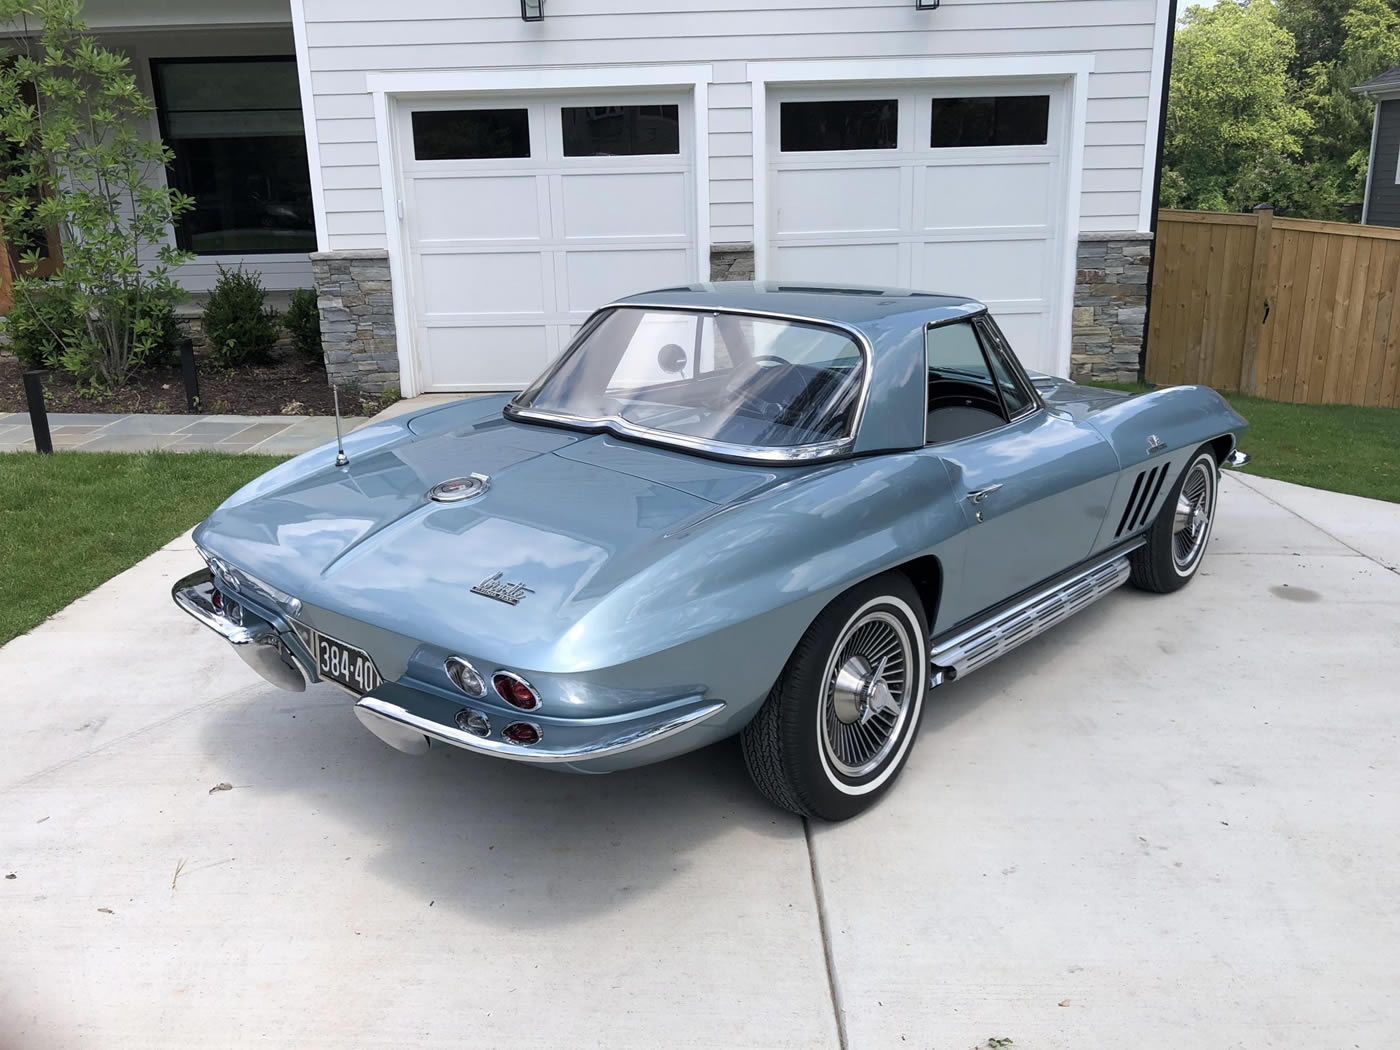 1966 Corvette Convertible 427/390 4-Speed in Trophy Blue